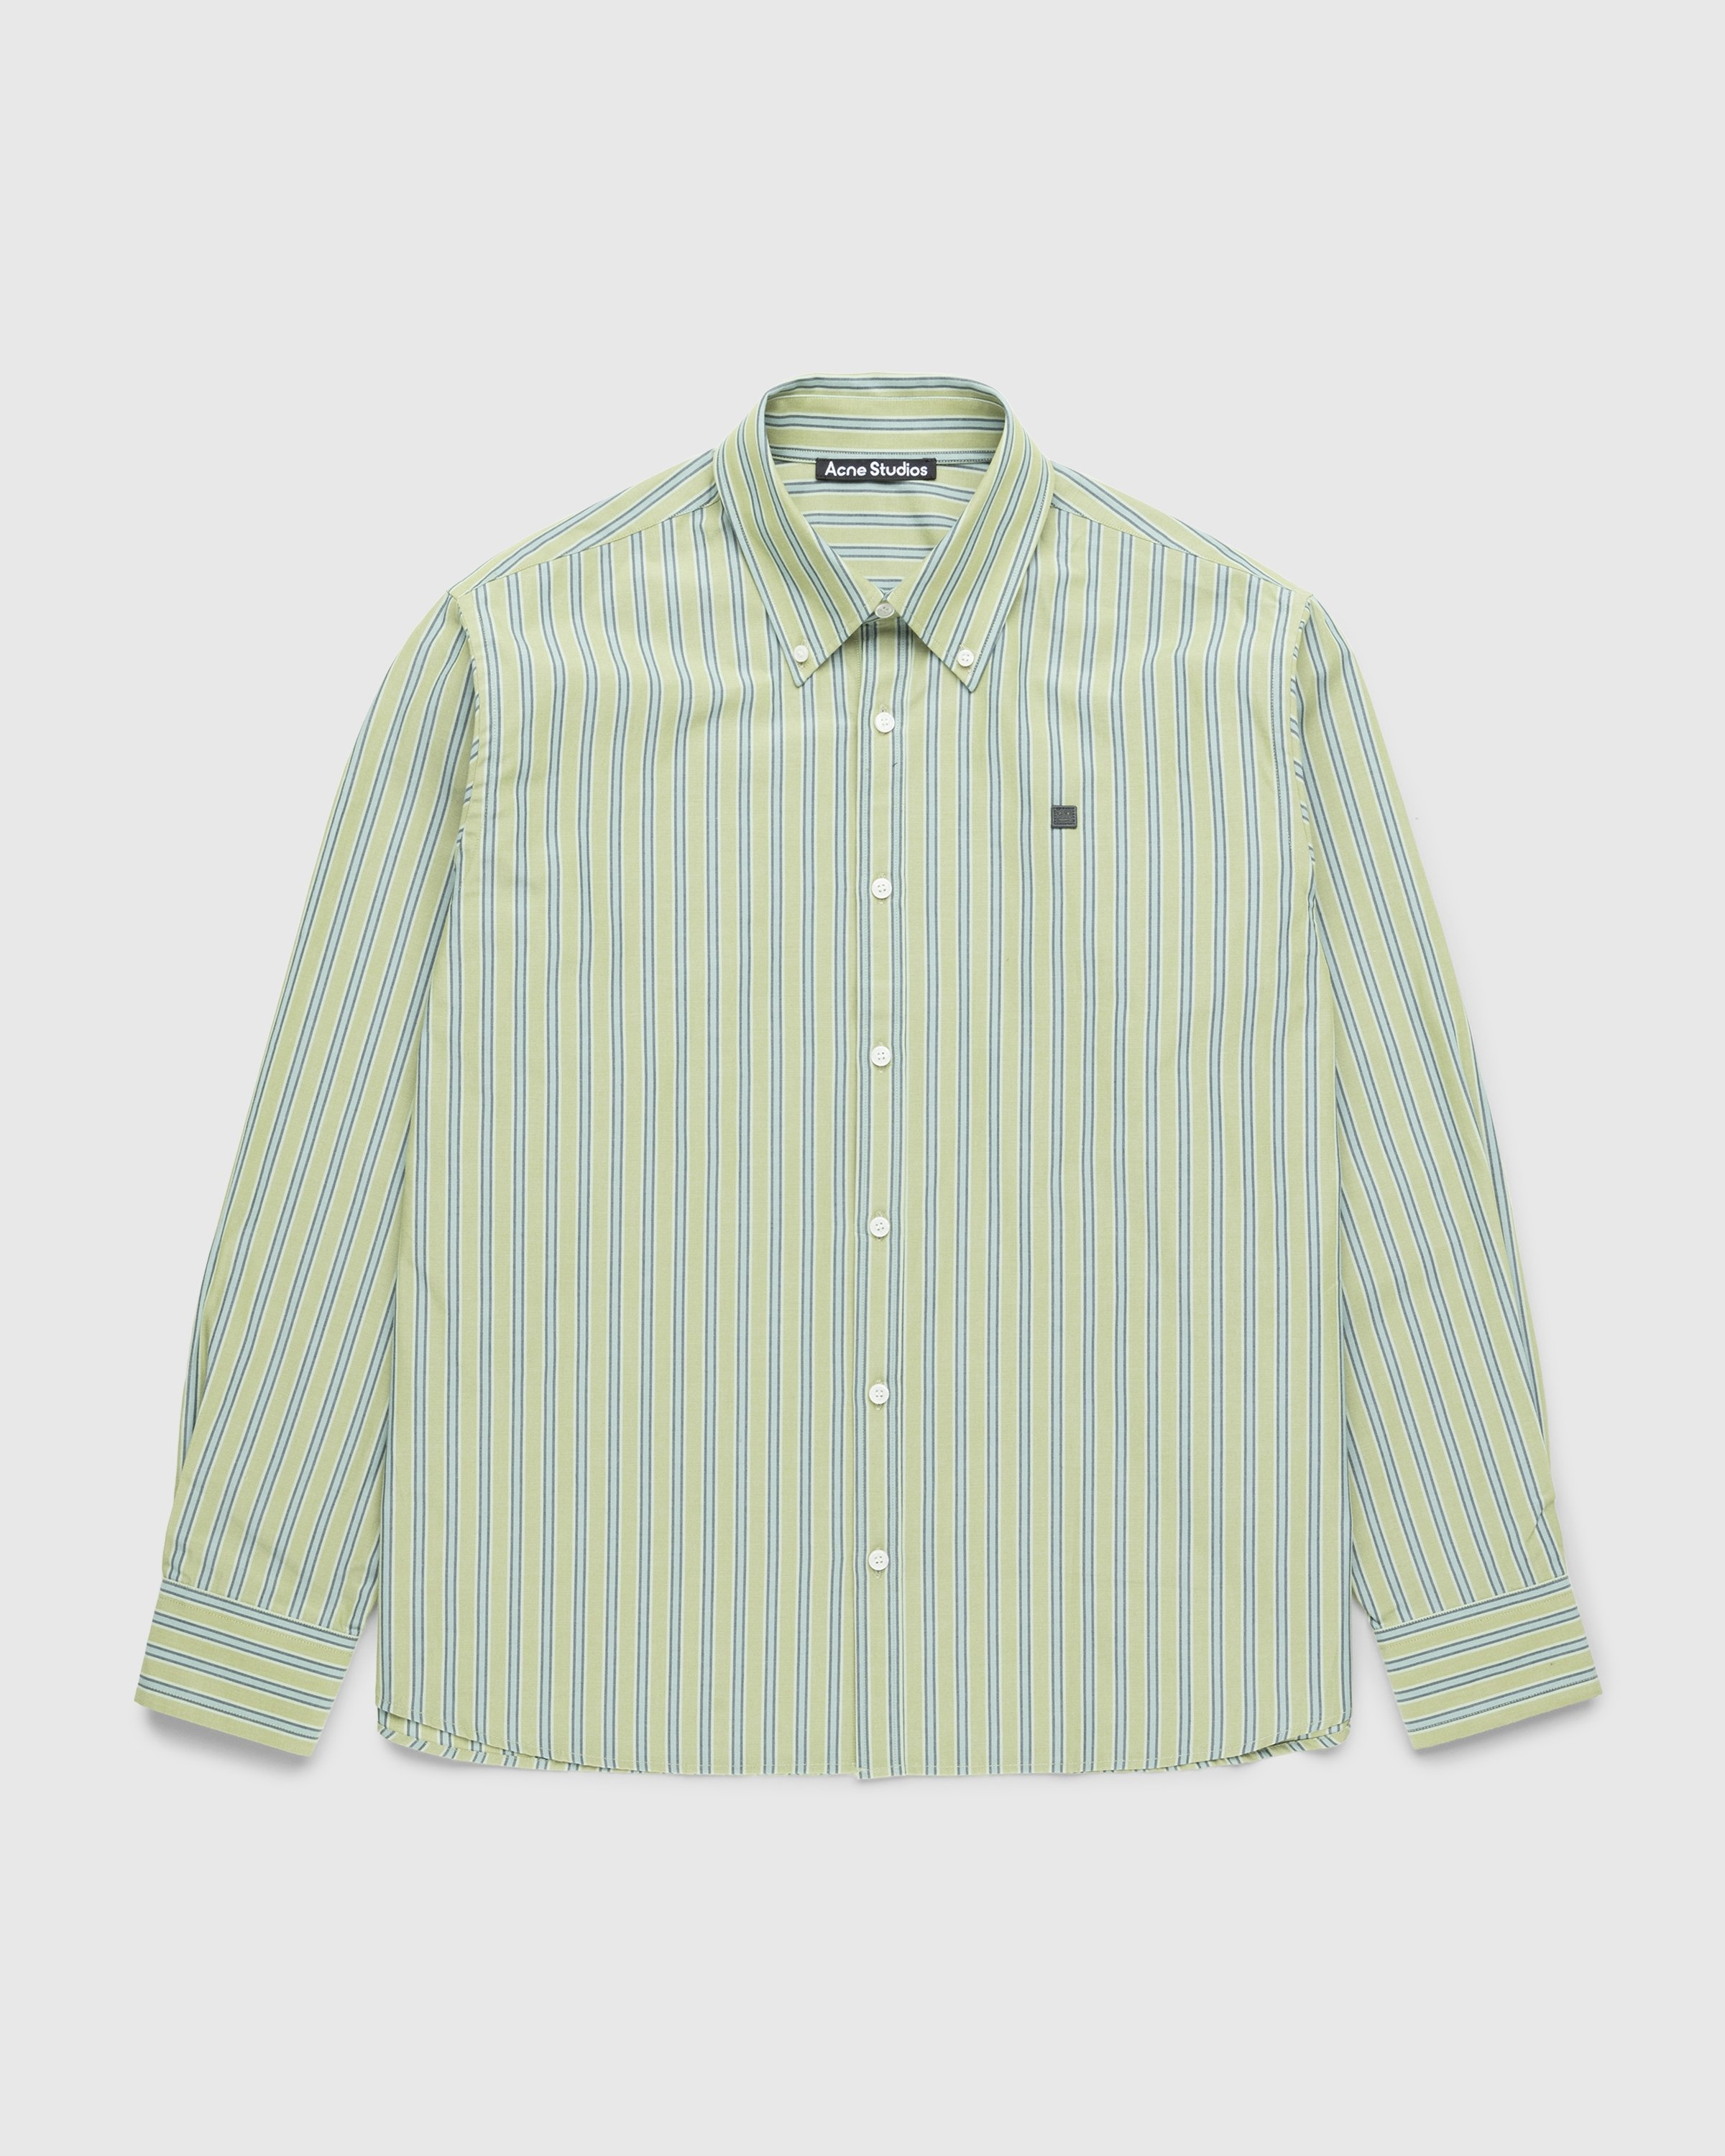 Acne Studios – Stripe Button-Up Shirt Bright Green/Dark Green